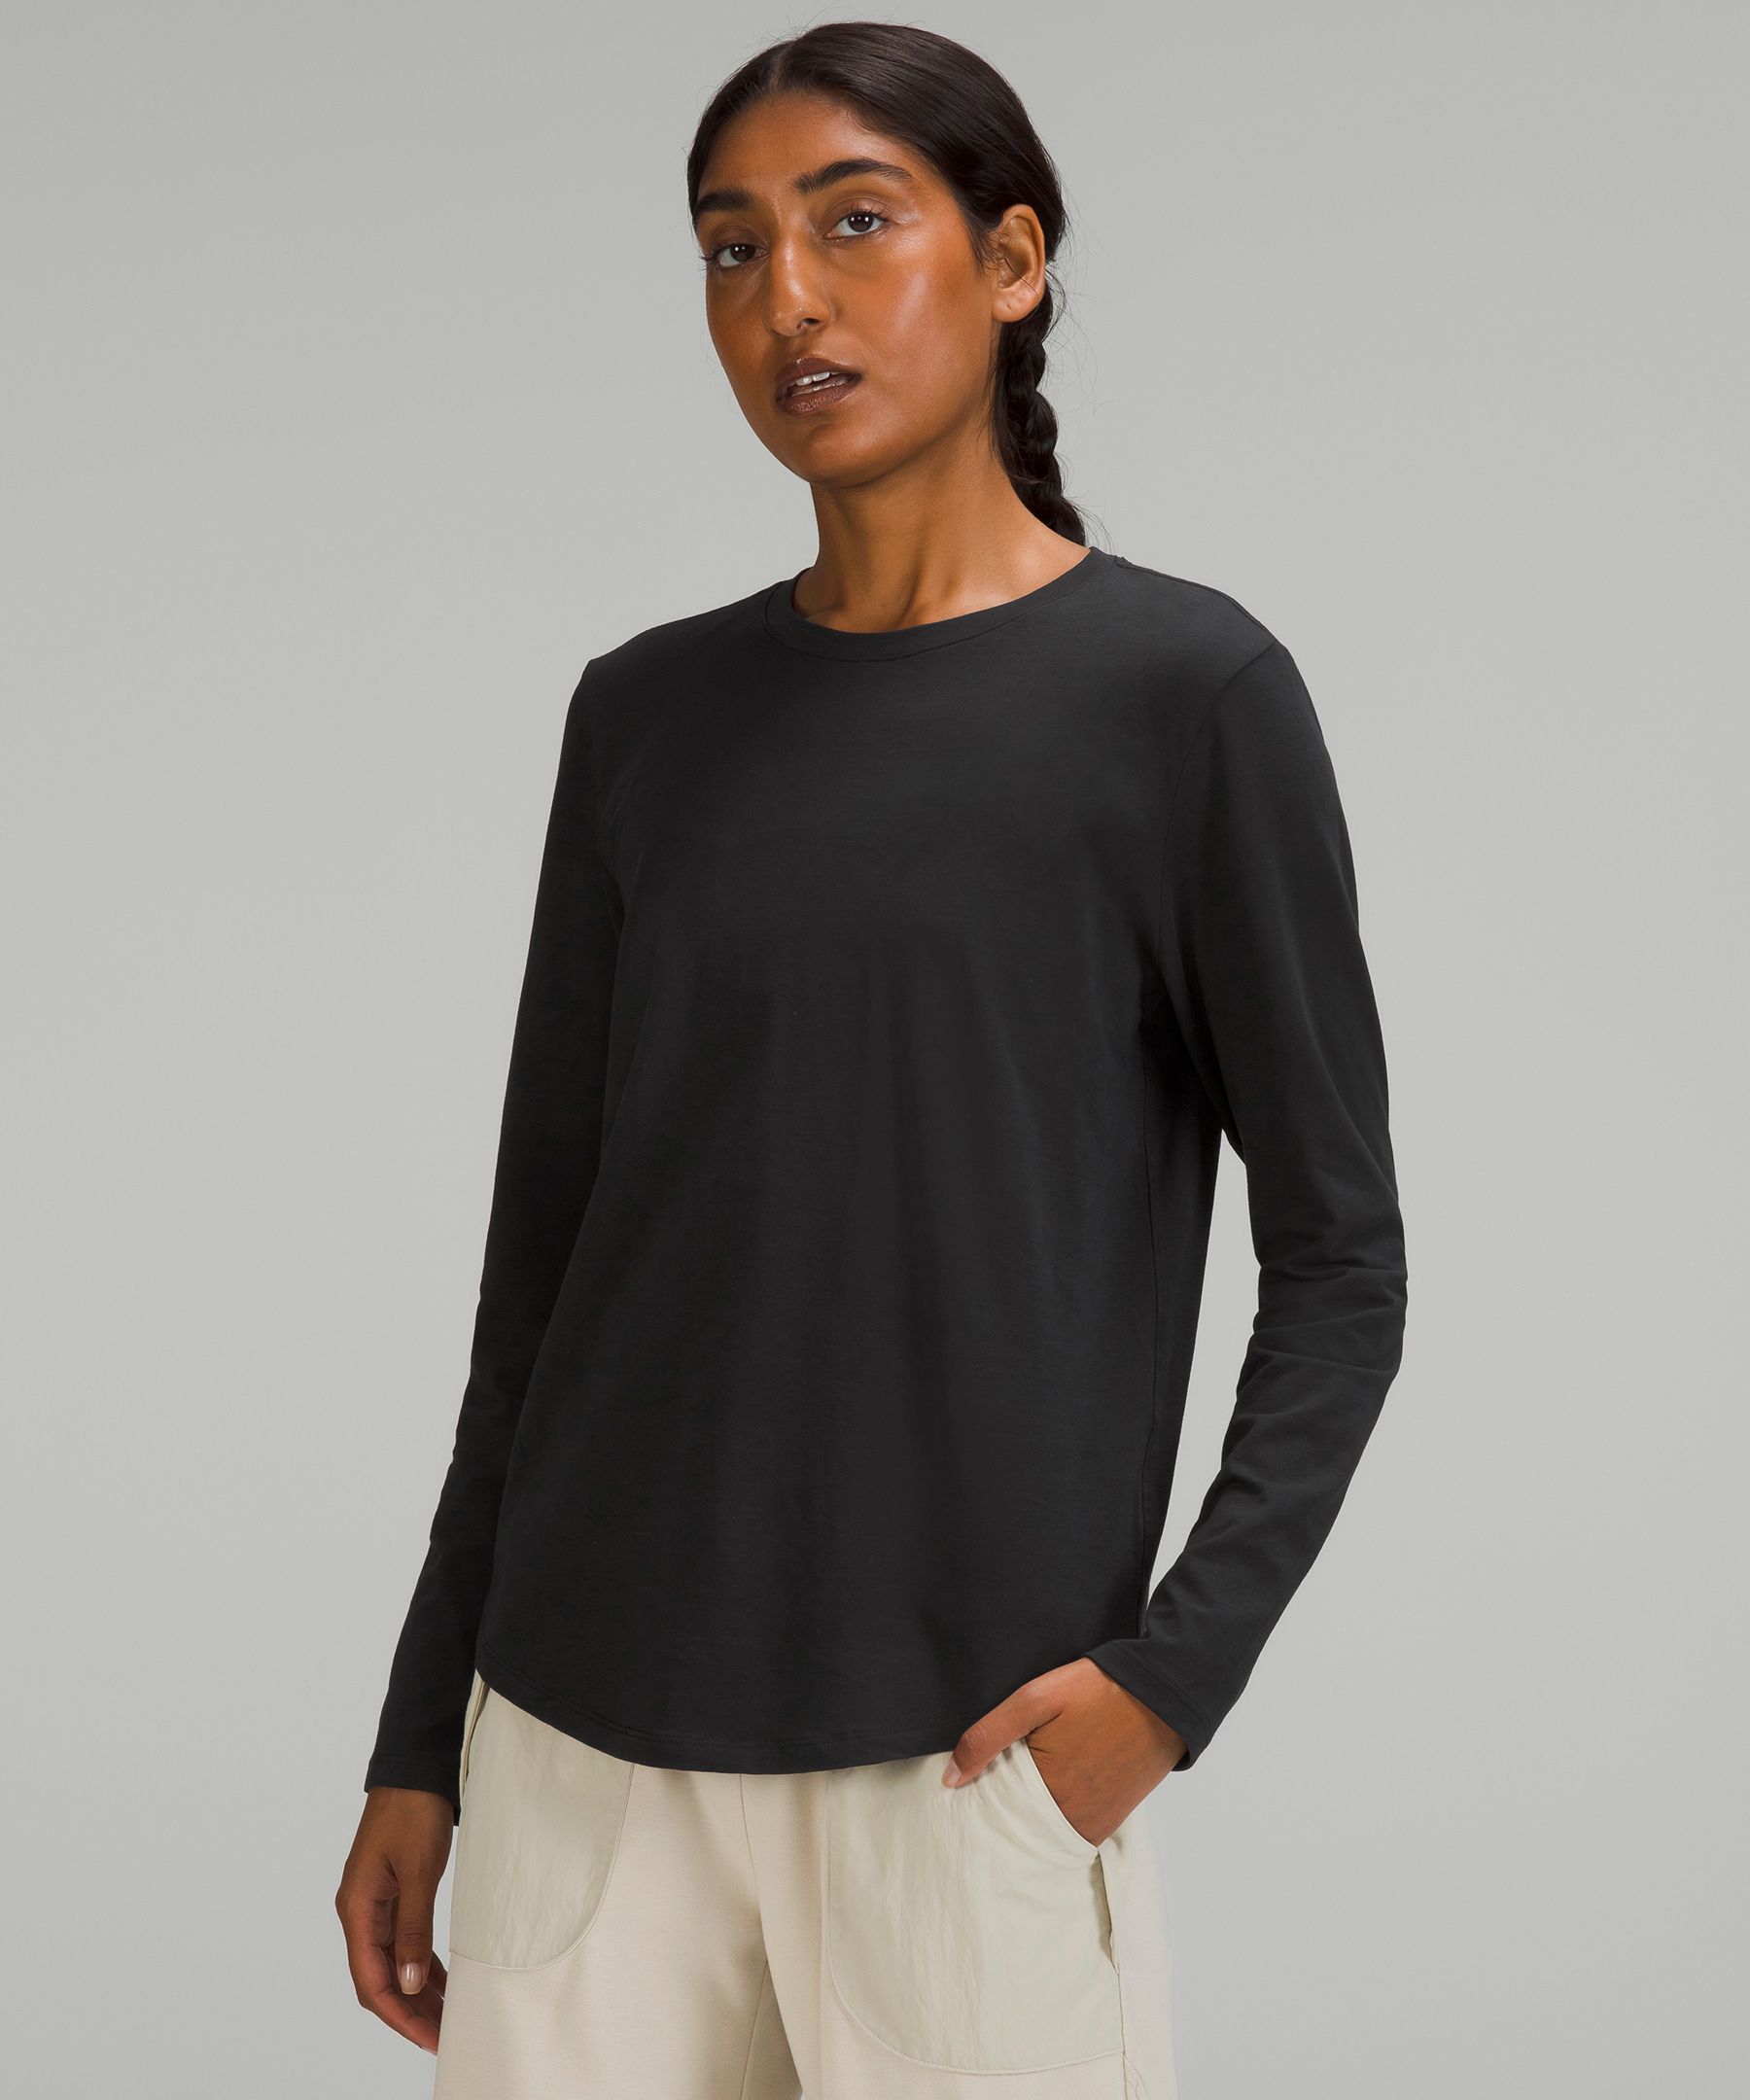 Lululemon Love Long-Sleeve Shirt - Black/Neutral - Size 14 Pima Cotton Fabric